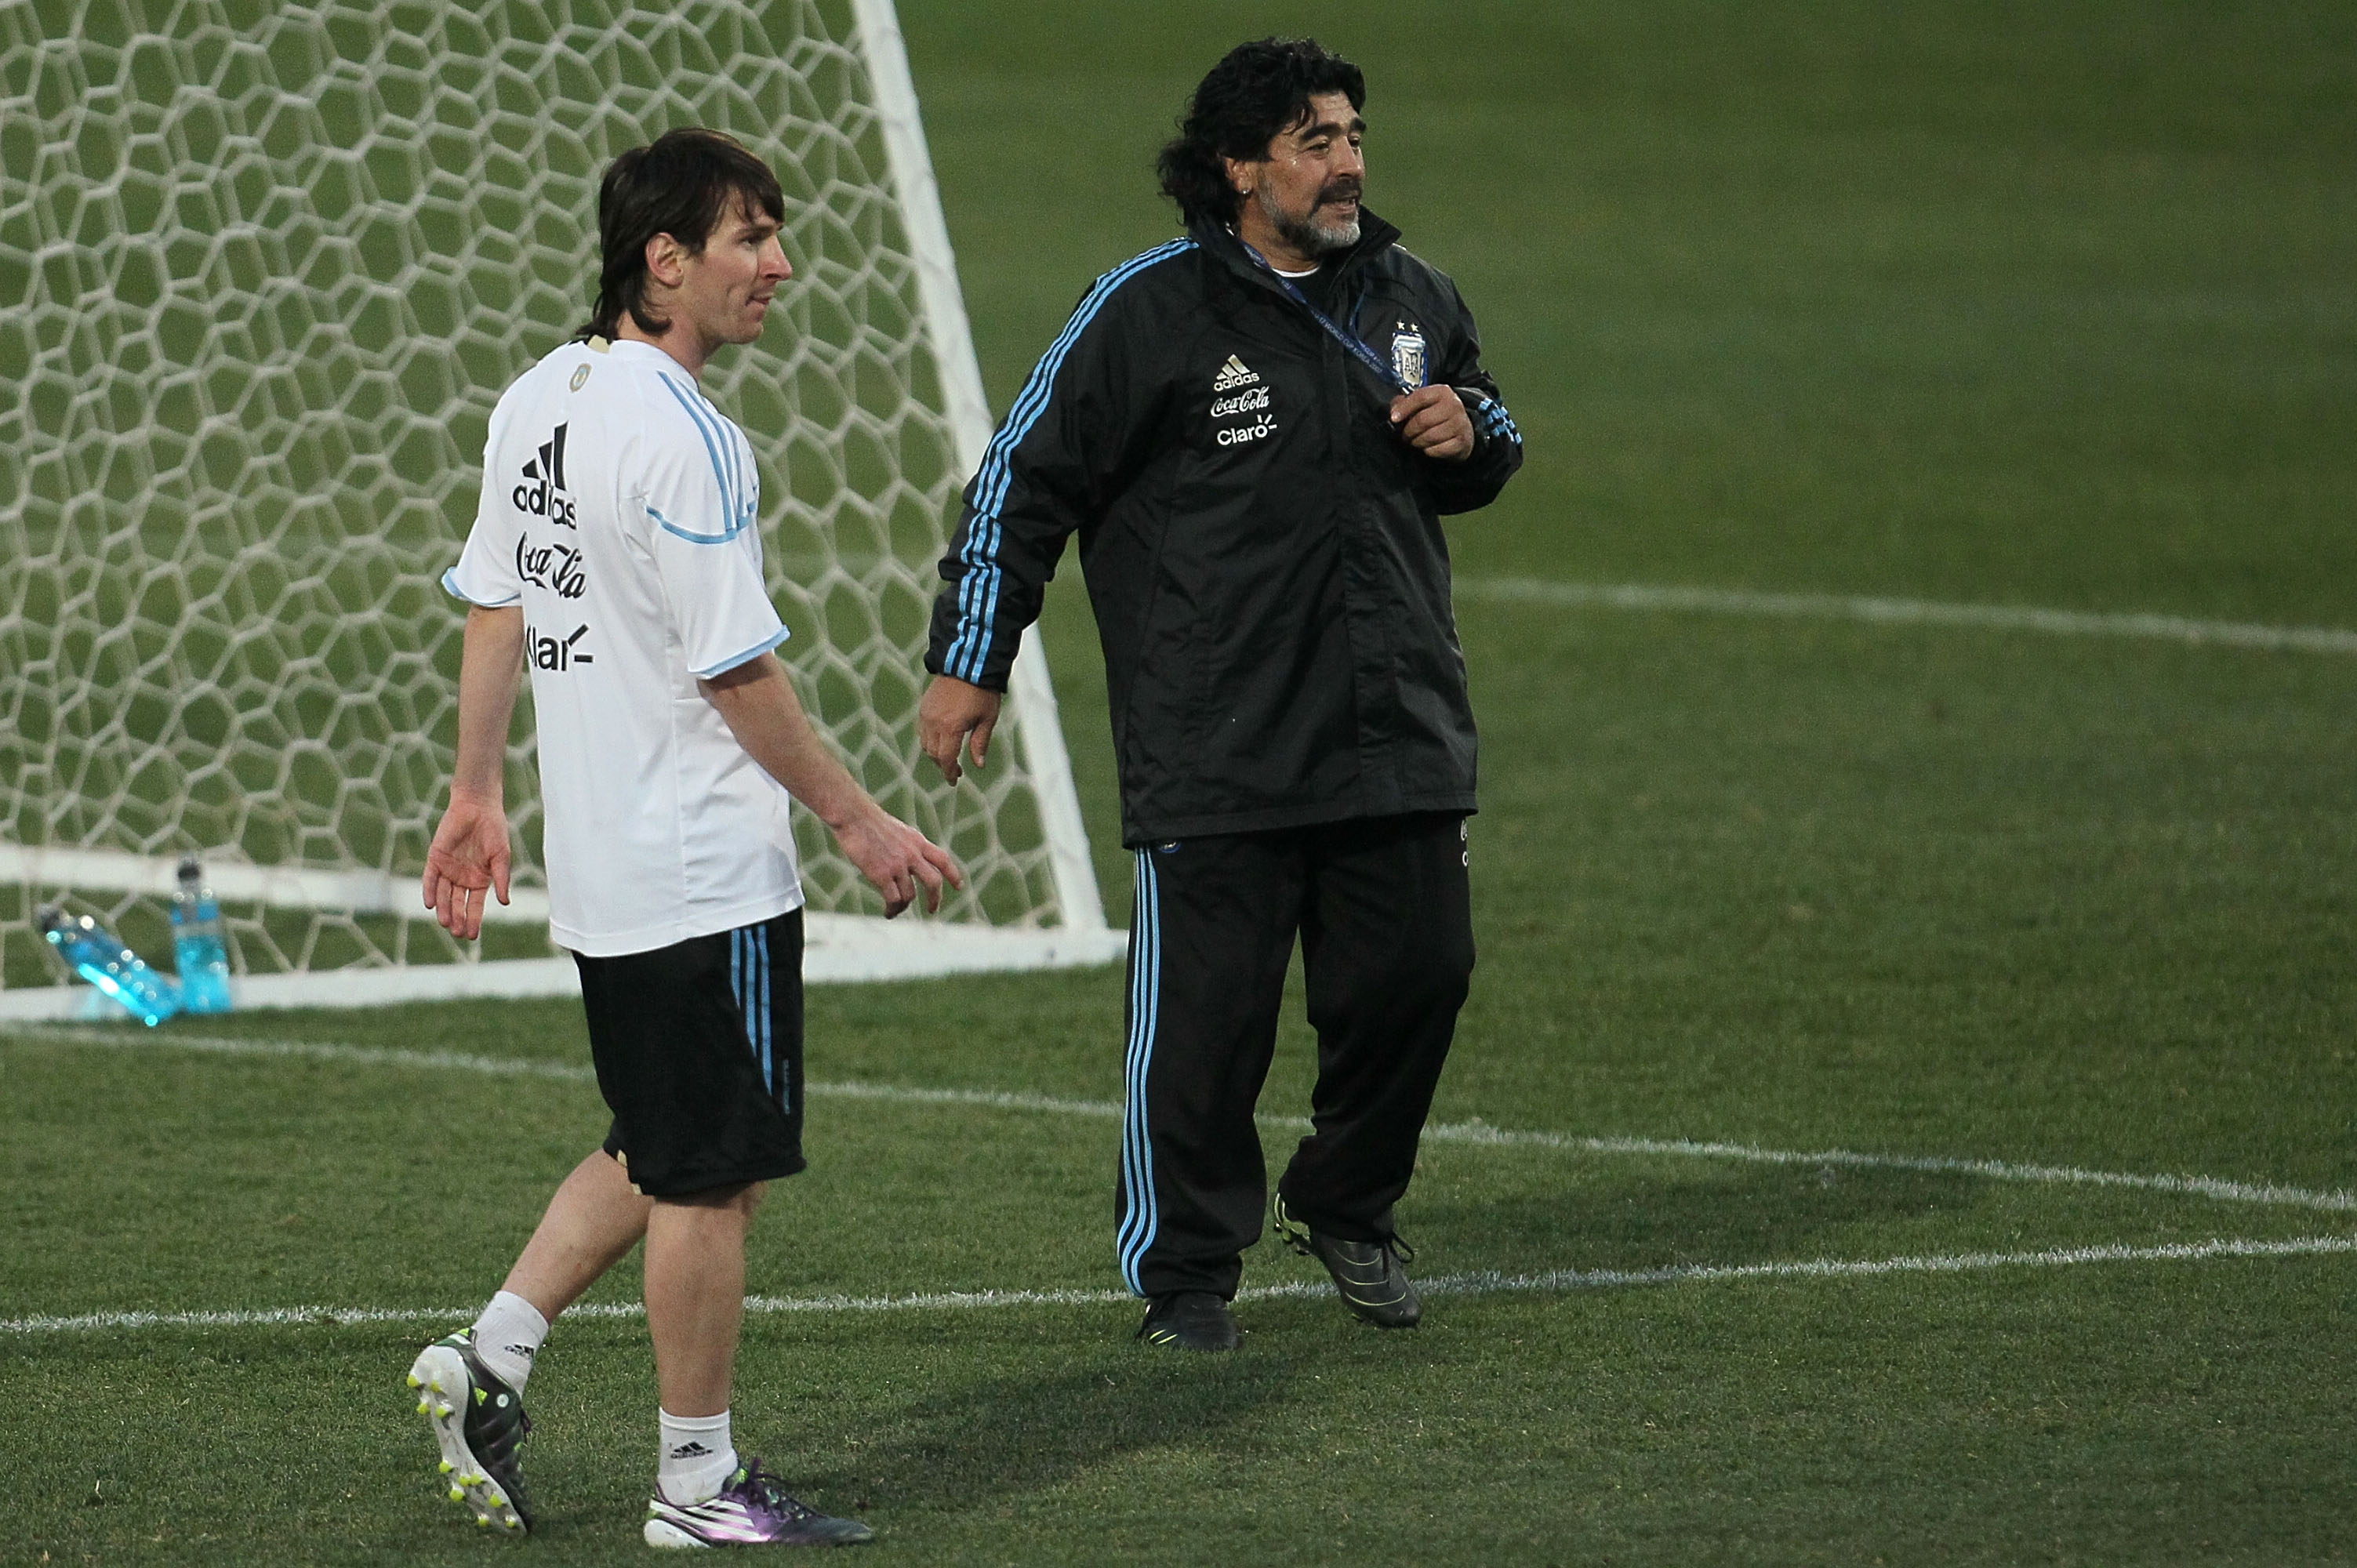 Messi has no personality, lacks character to be leader, says Maradona